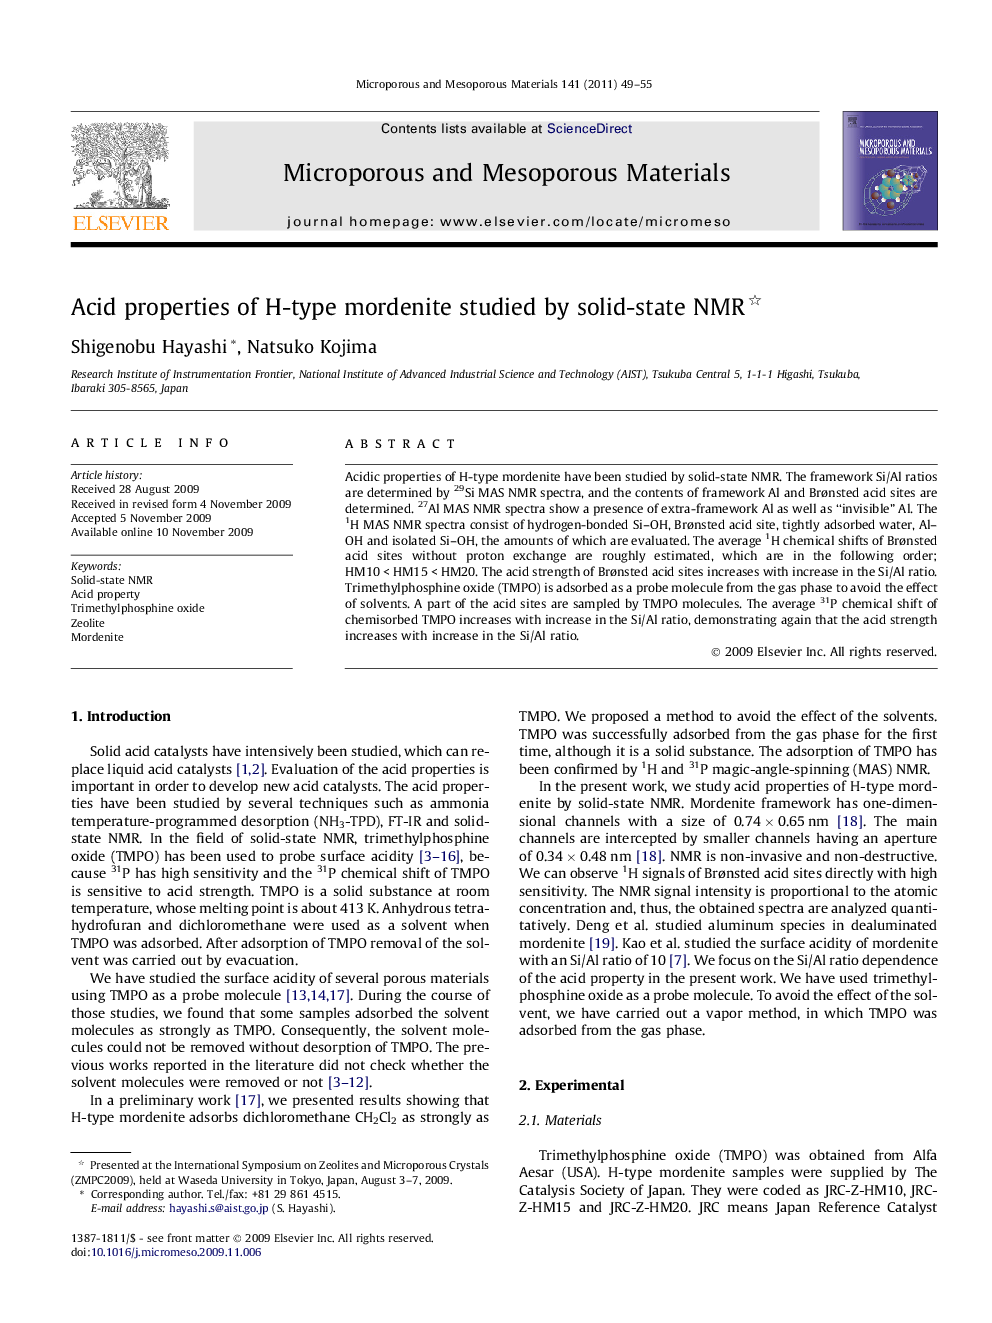 Acid properties of H-type mordenite studied by solid-state NMR 